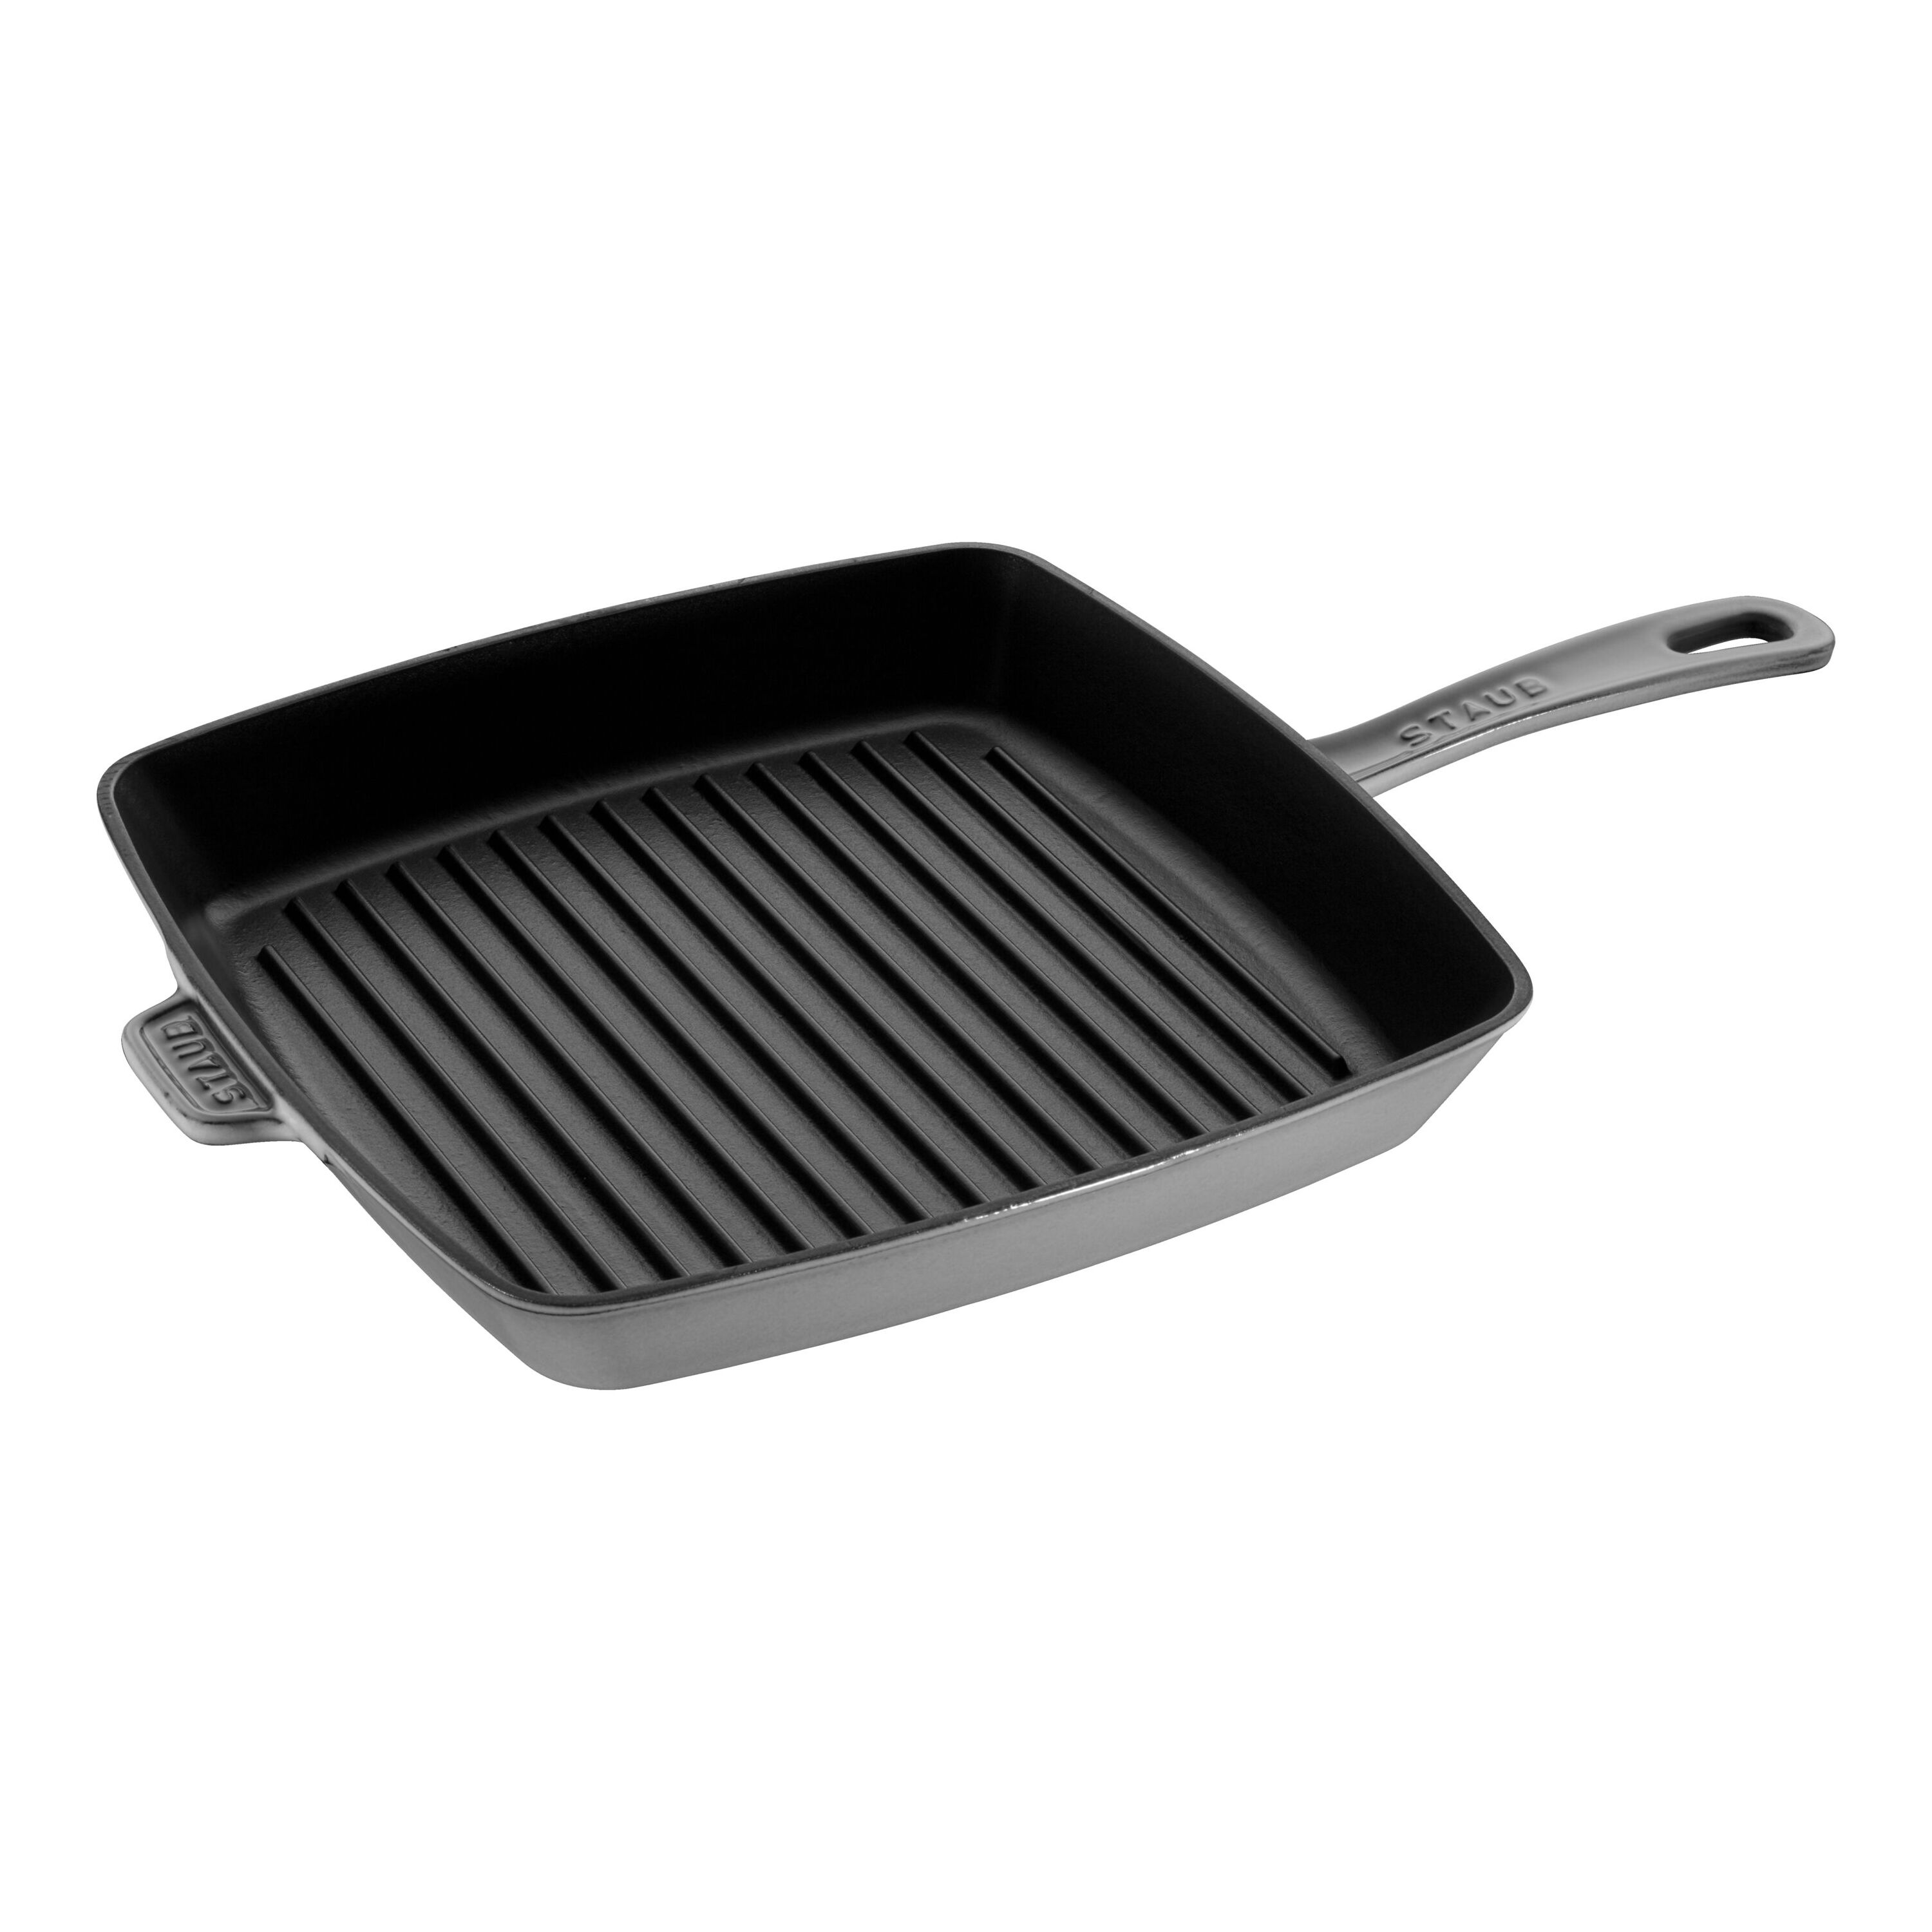 Staub Grill pan rectangular - 40509-343-0